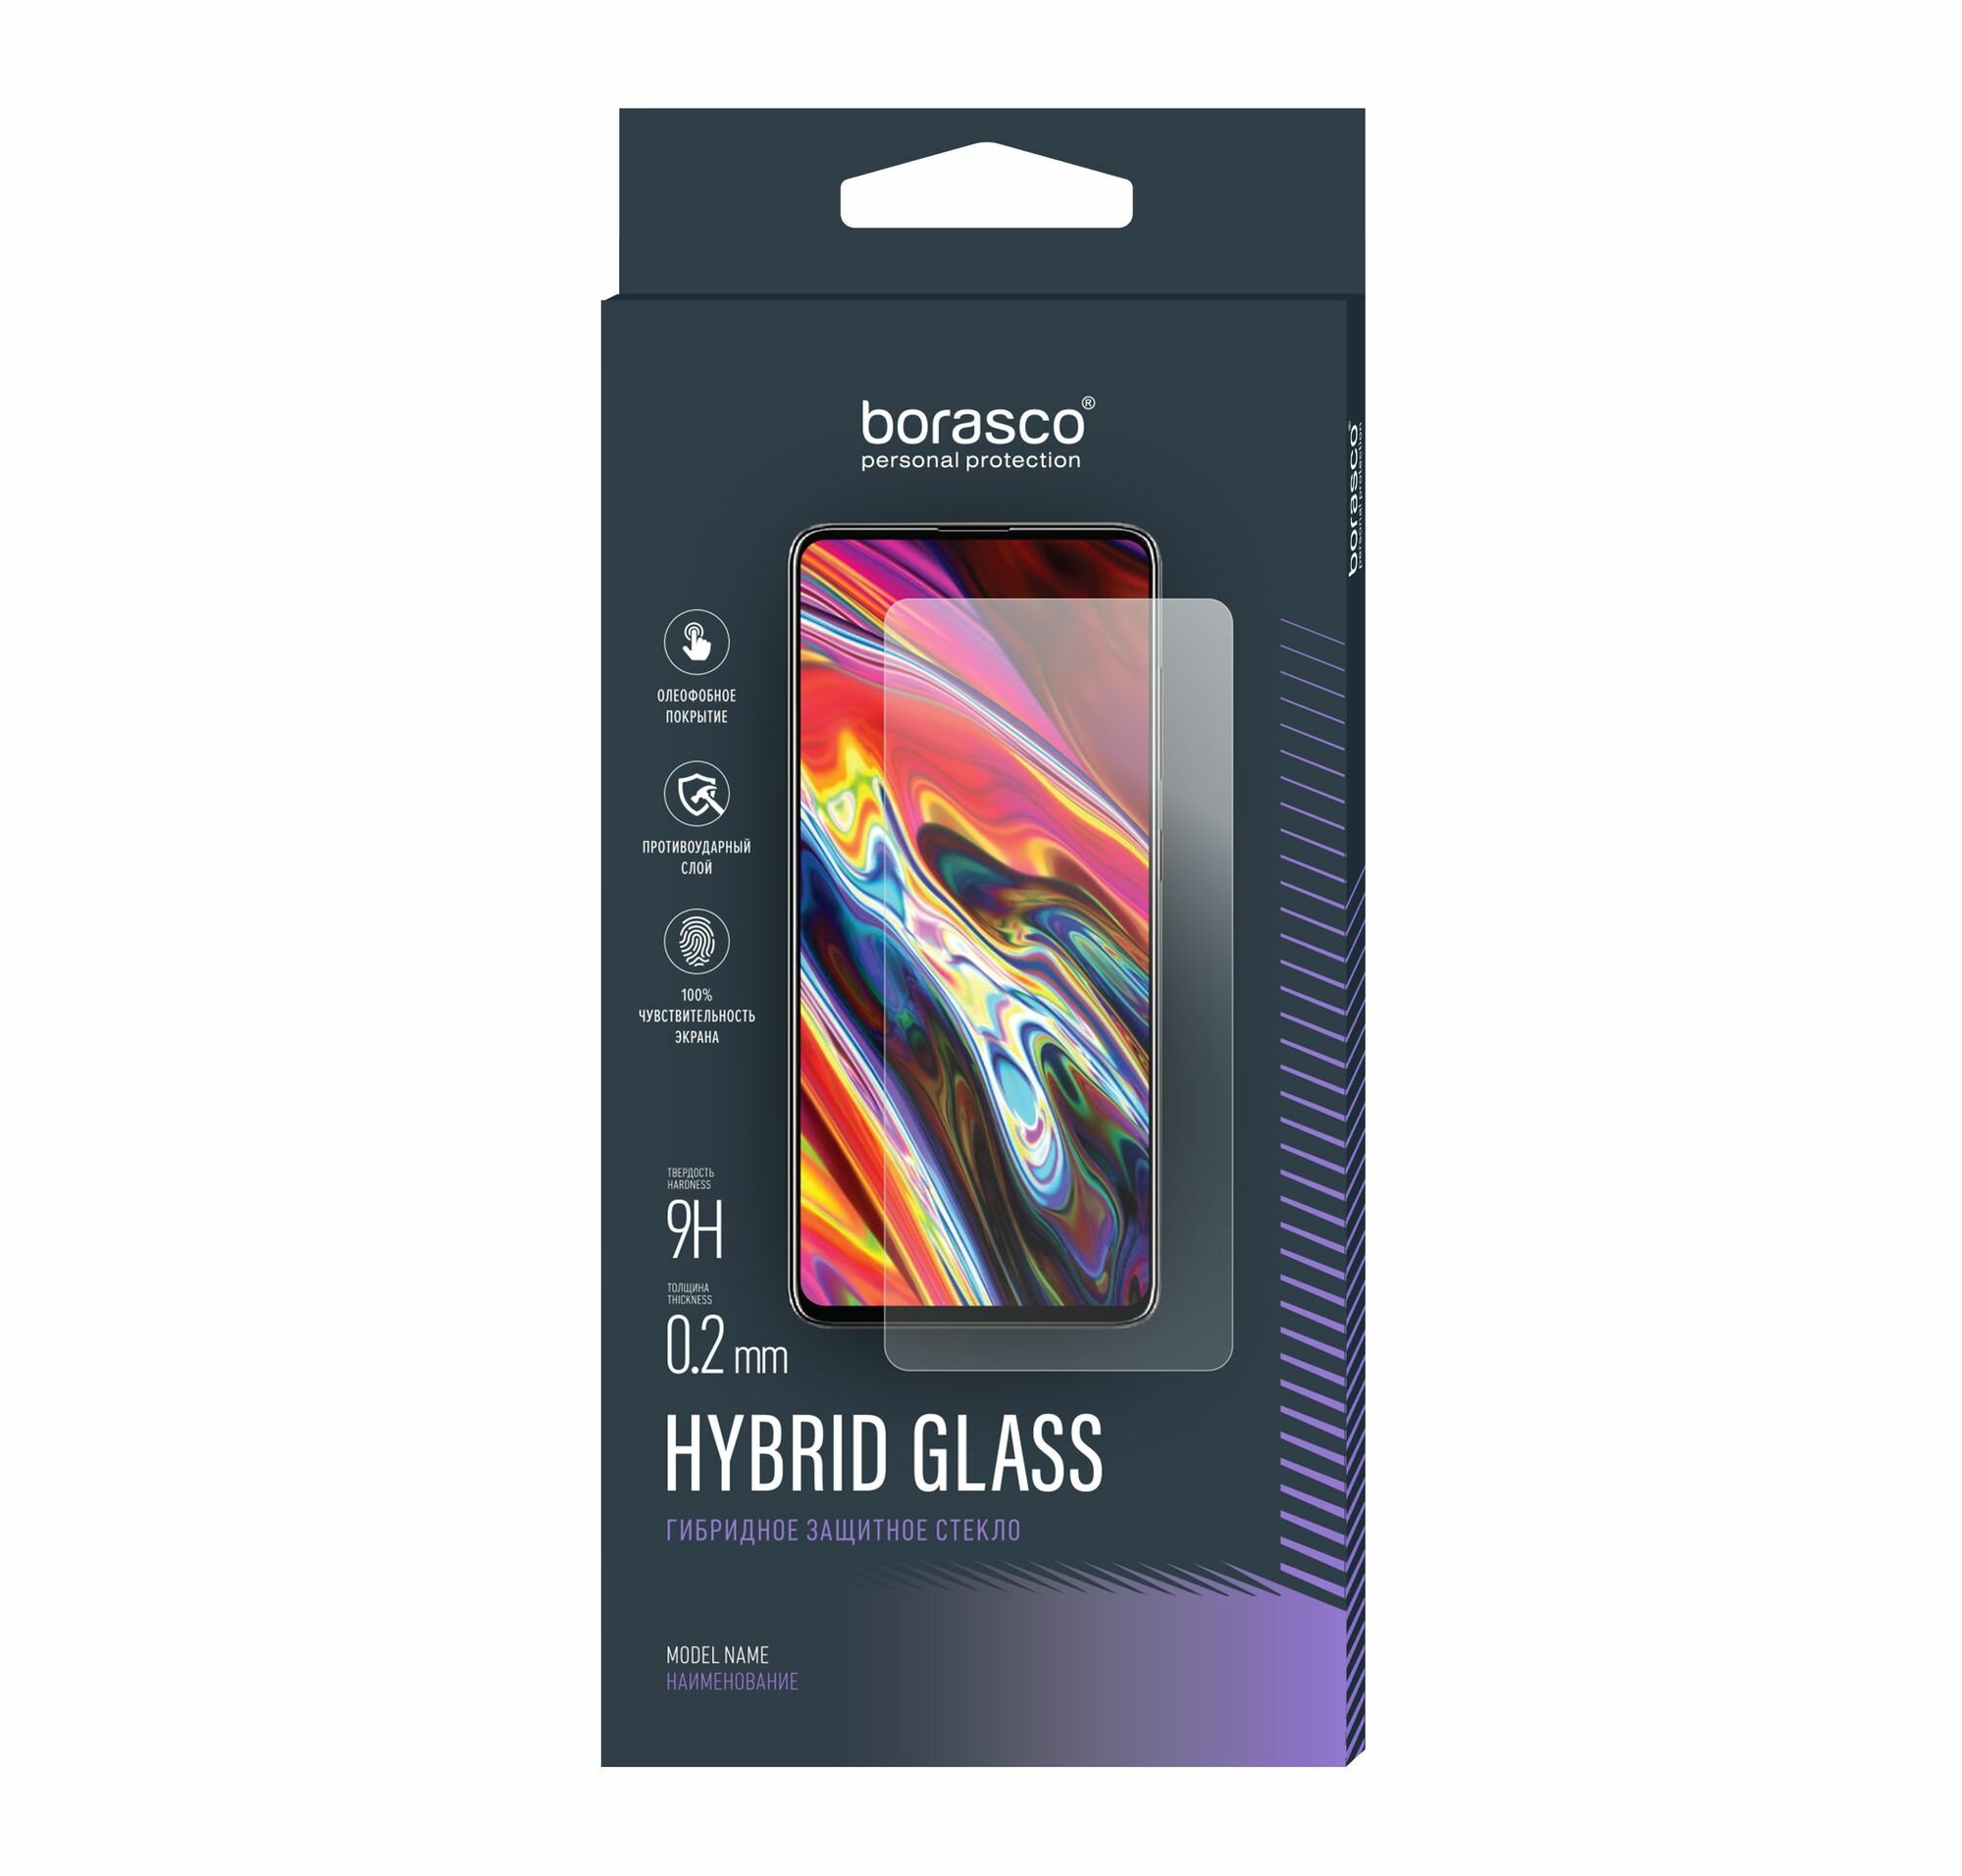 Стекло защитное Hybrid Glass VSP 026 мм для Huawei MediaPad M2